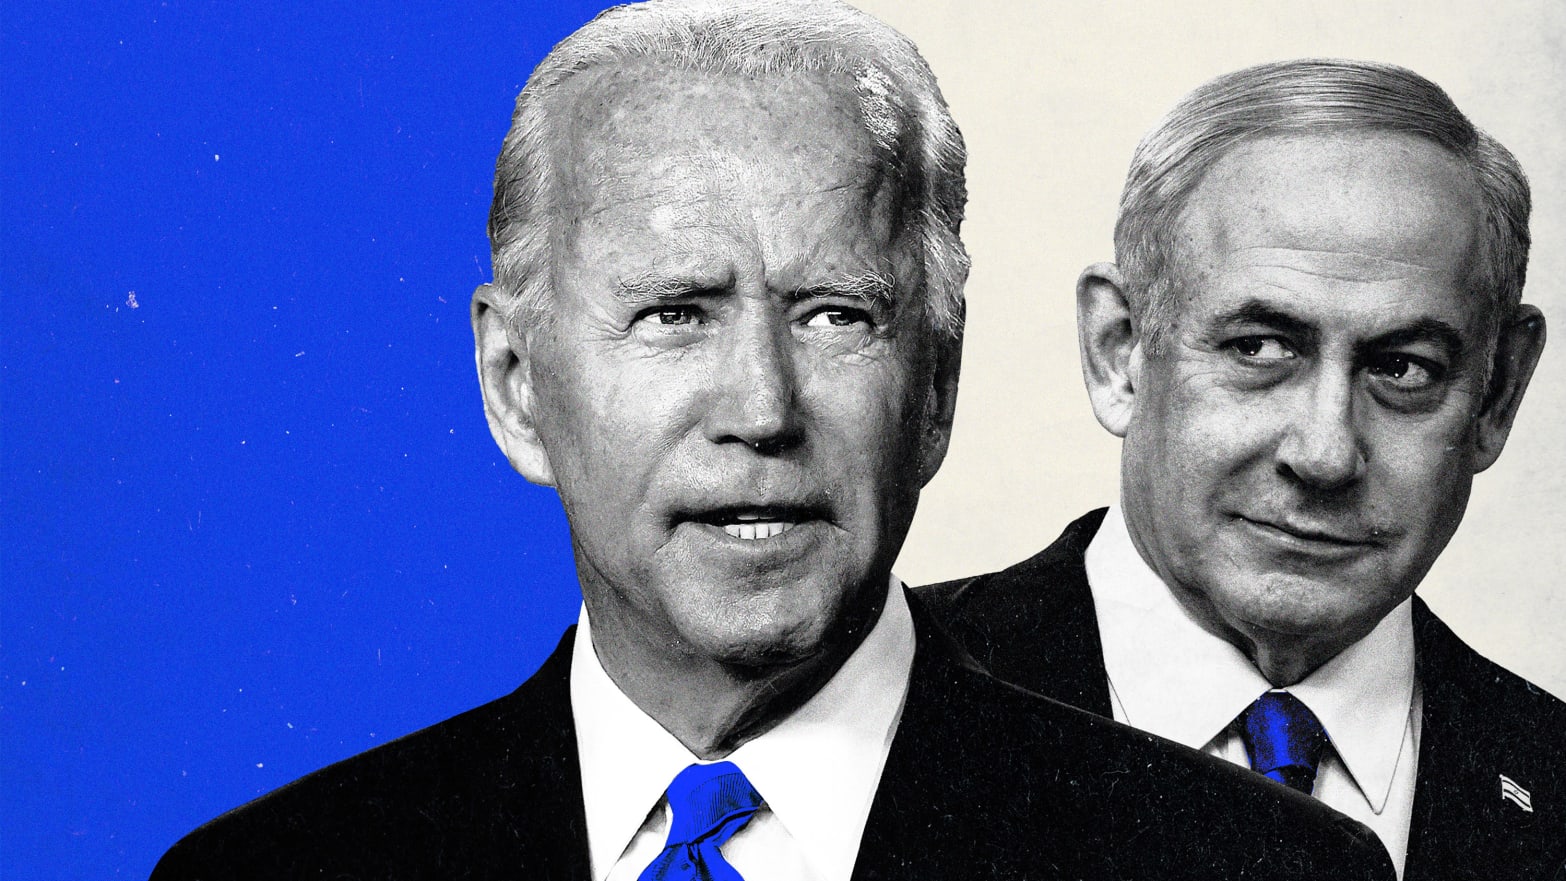 An illustration that includes photos of U.S. President Joe Biden and Benjamin "Bibi" Netanyahu